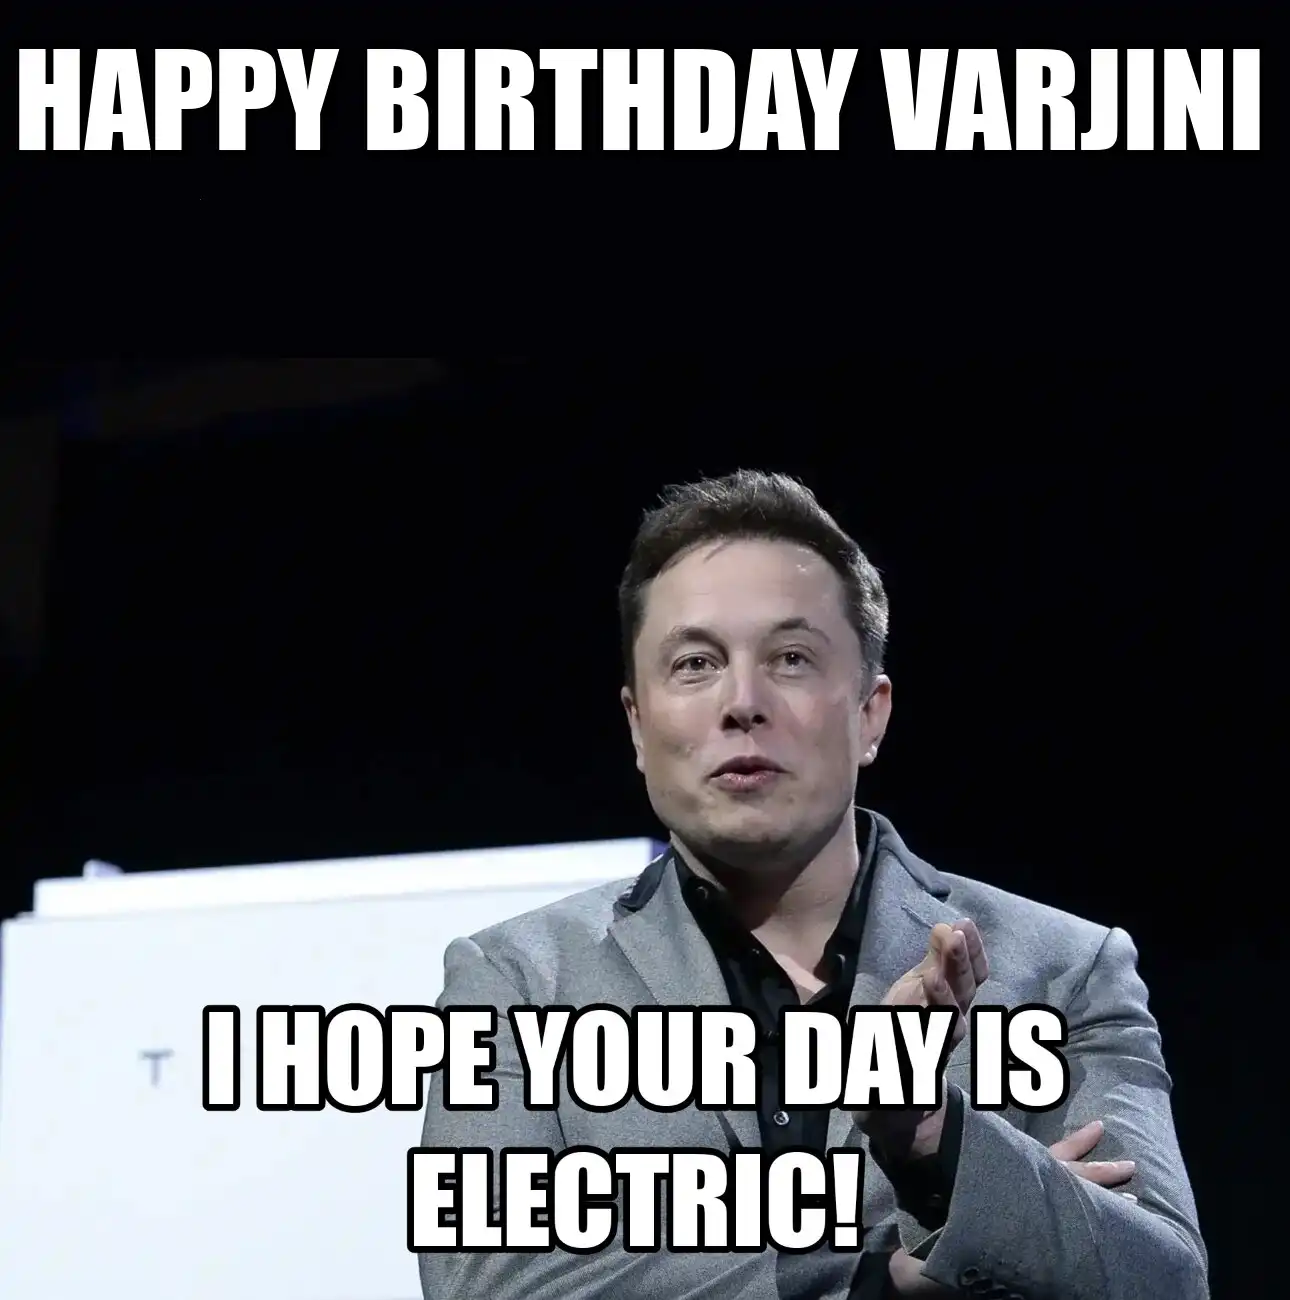 Happy Birthday Varjini I Hope Your Day Is Electric Meme